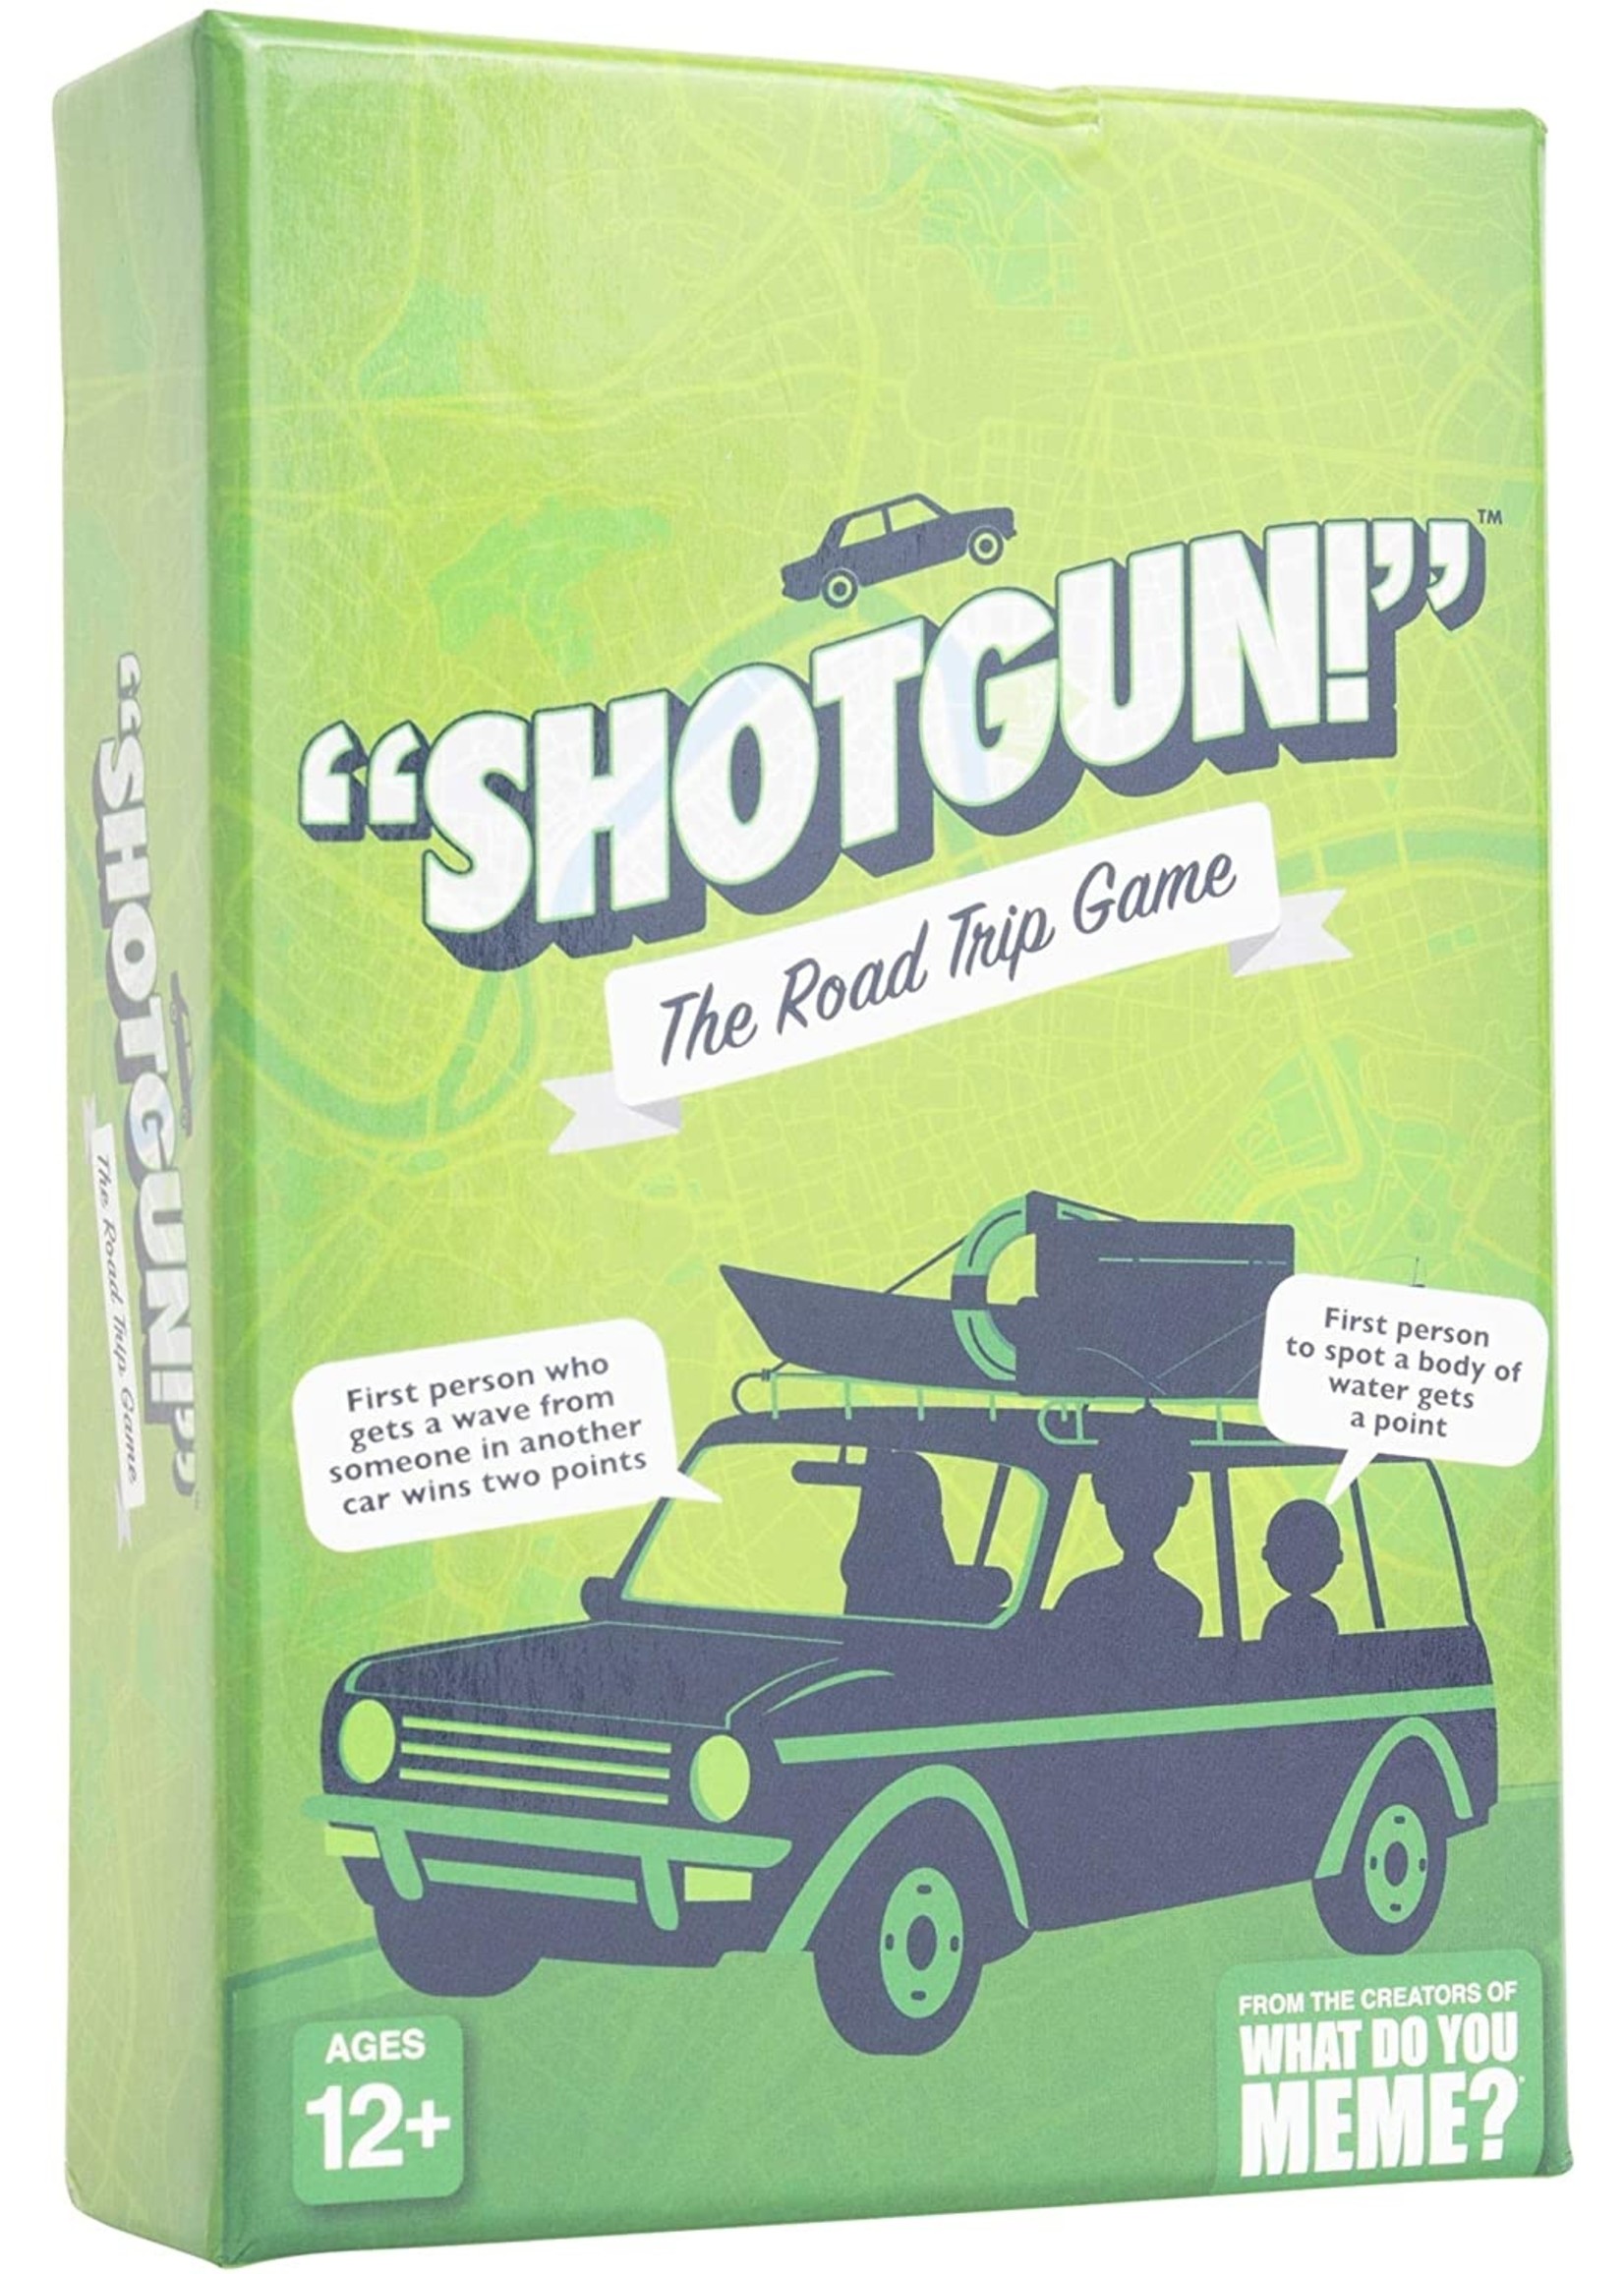 What Do You Meme Shotgun! - The Road Trip Game